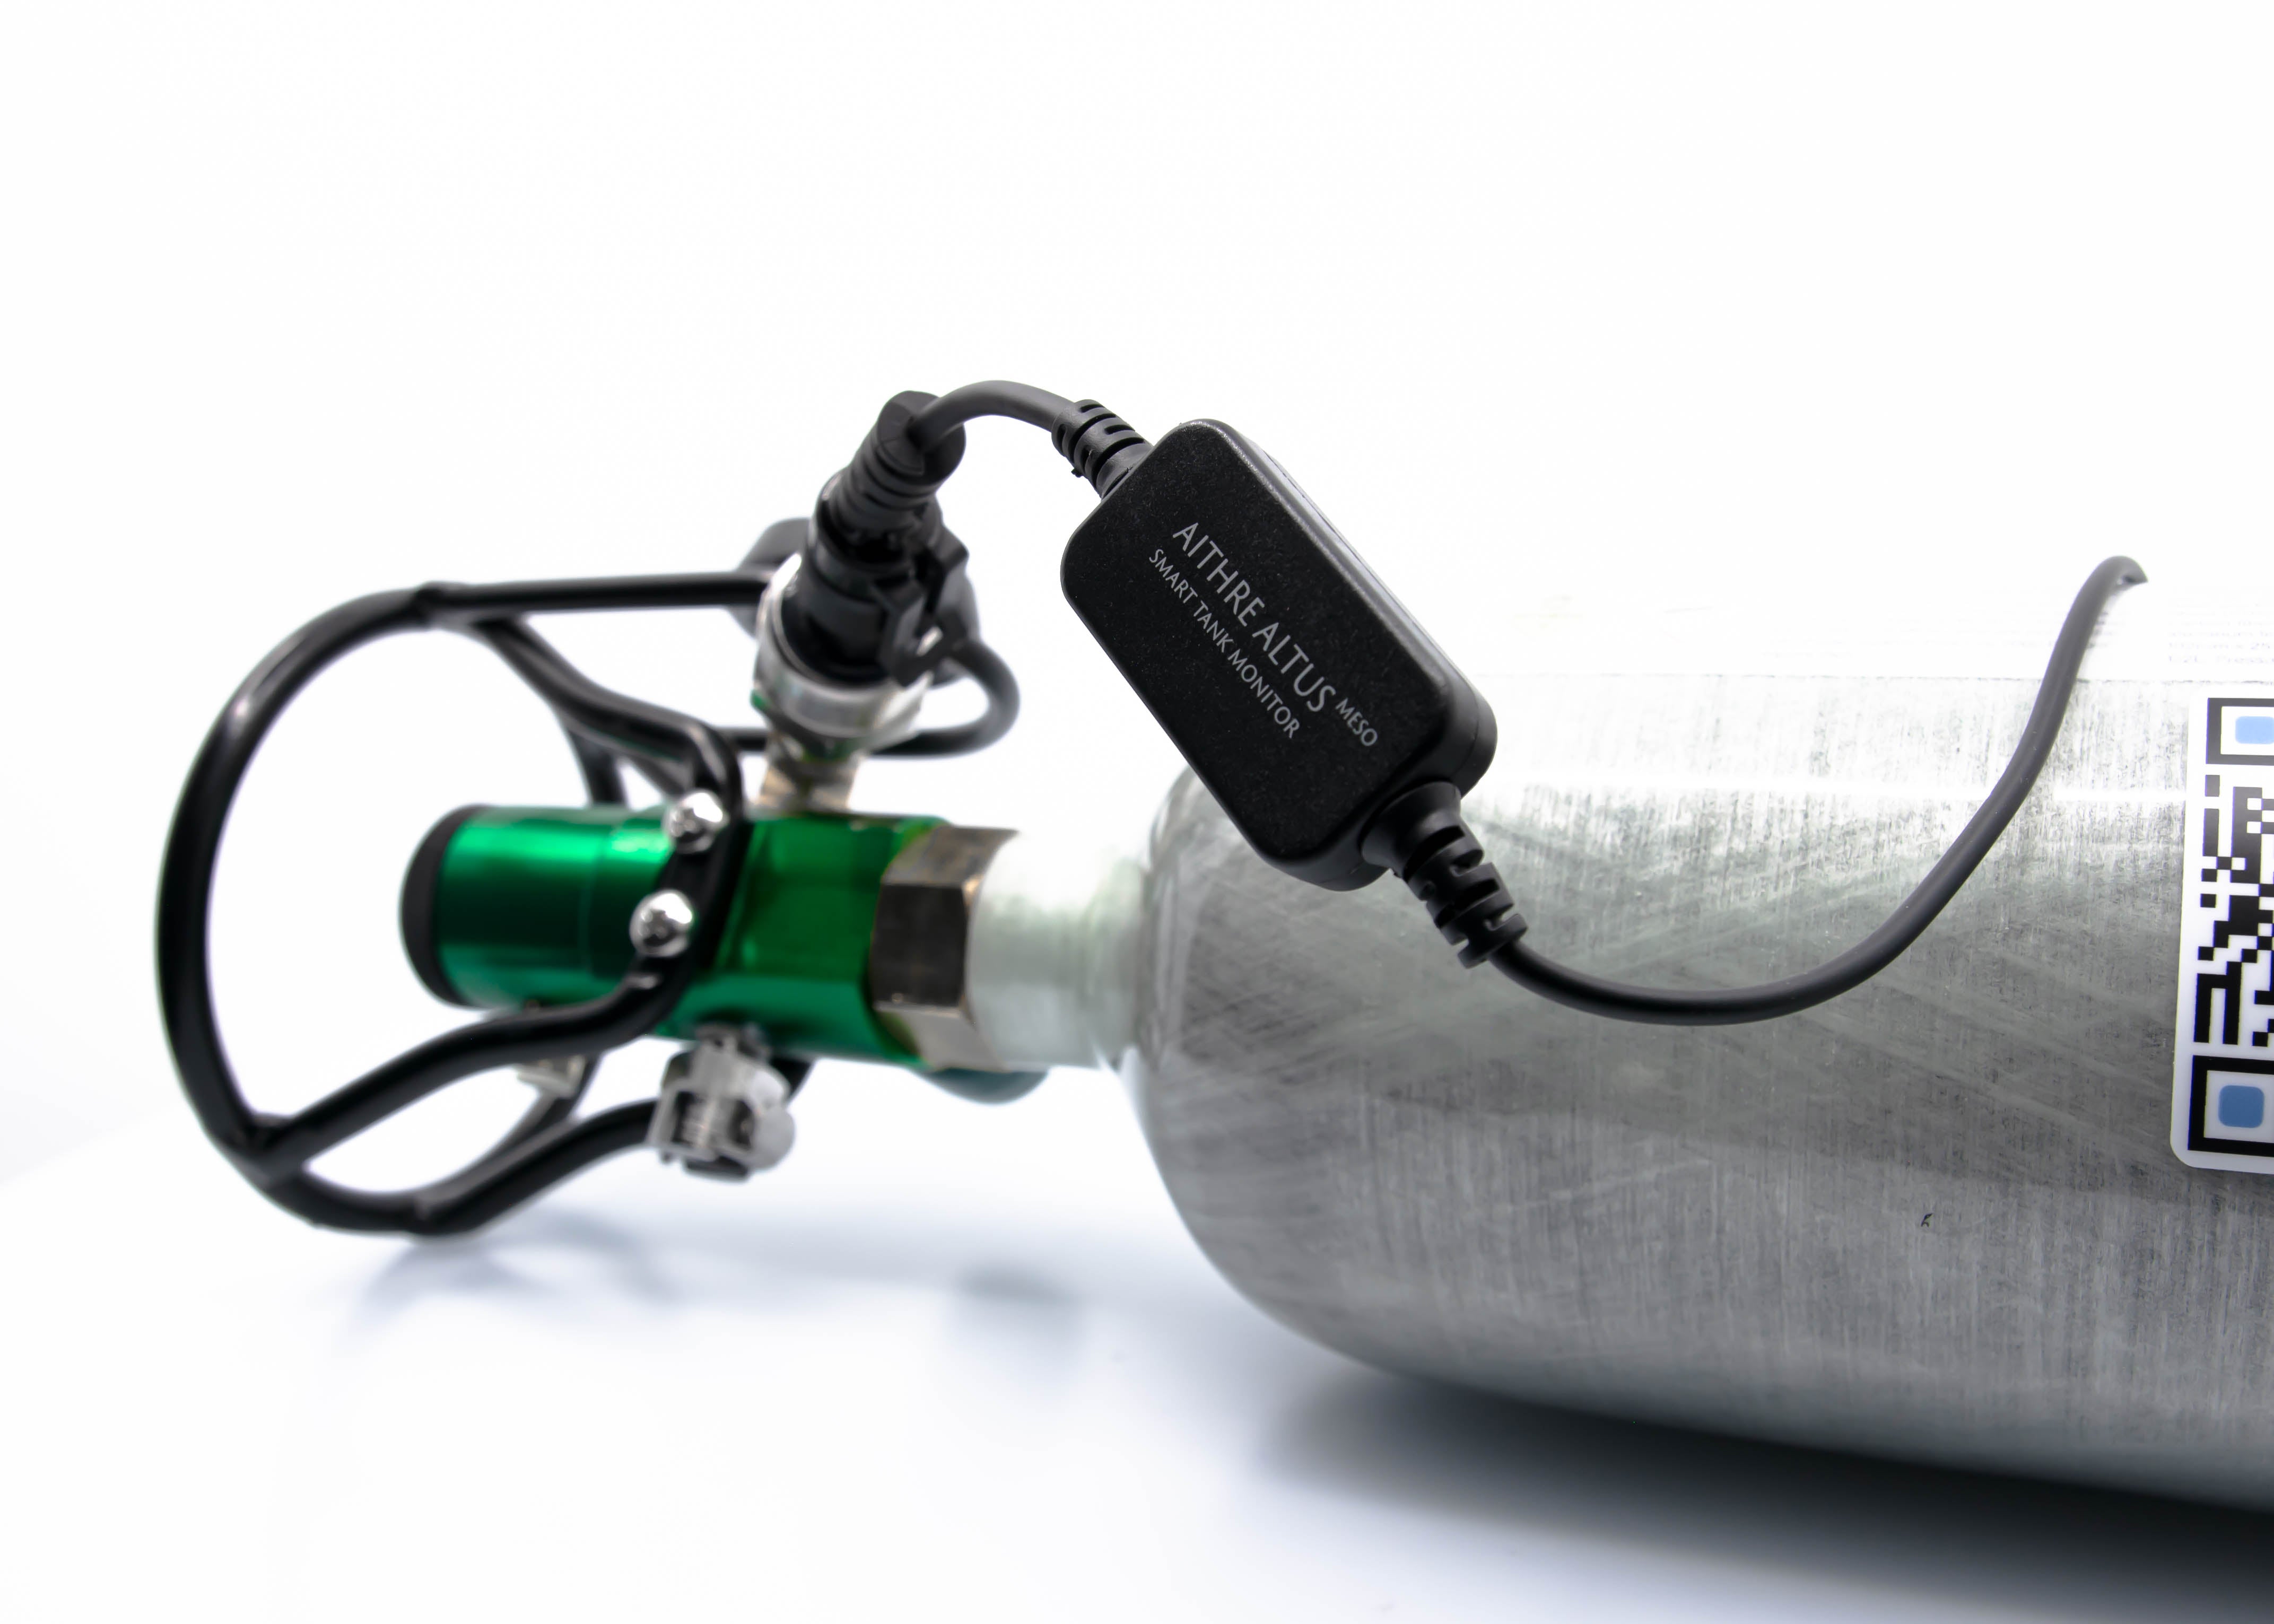 Altus Meso Portable Oxygen Tank Pressure Monitor - With iOS App - Blac